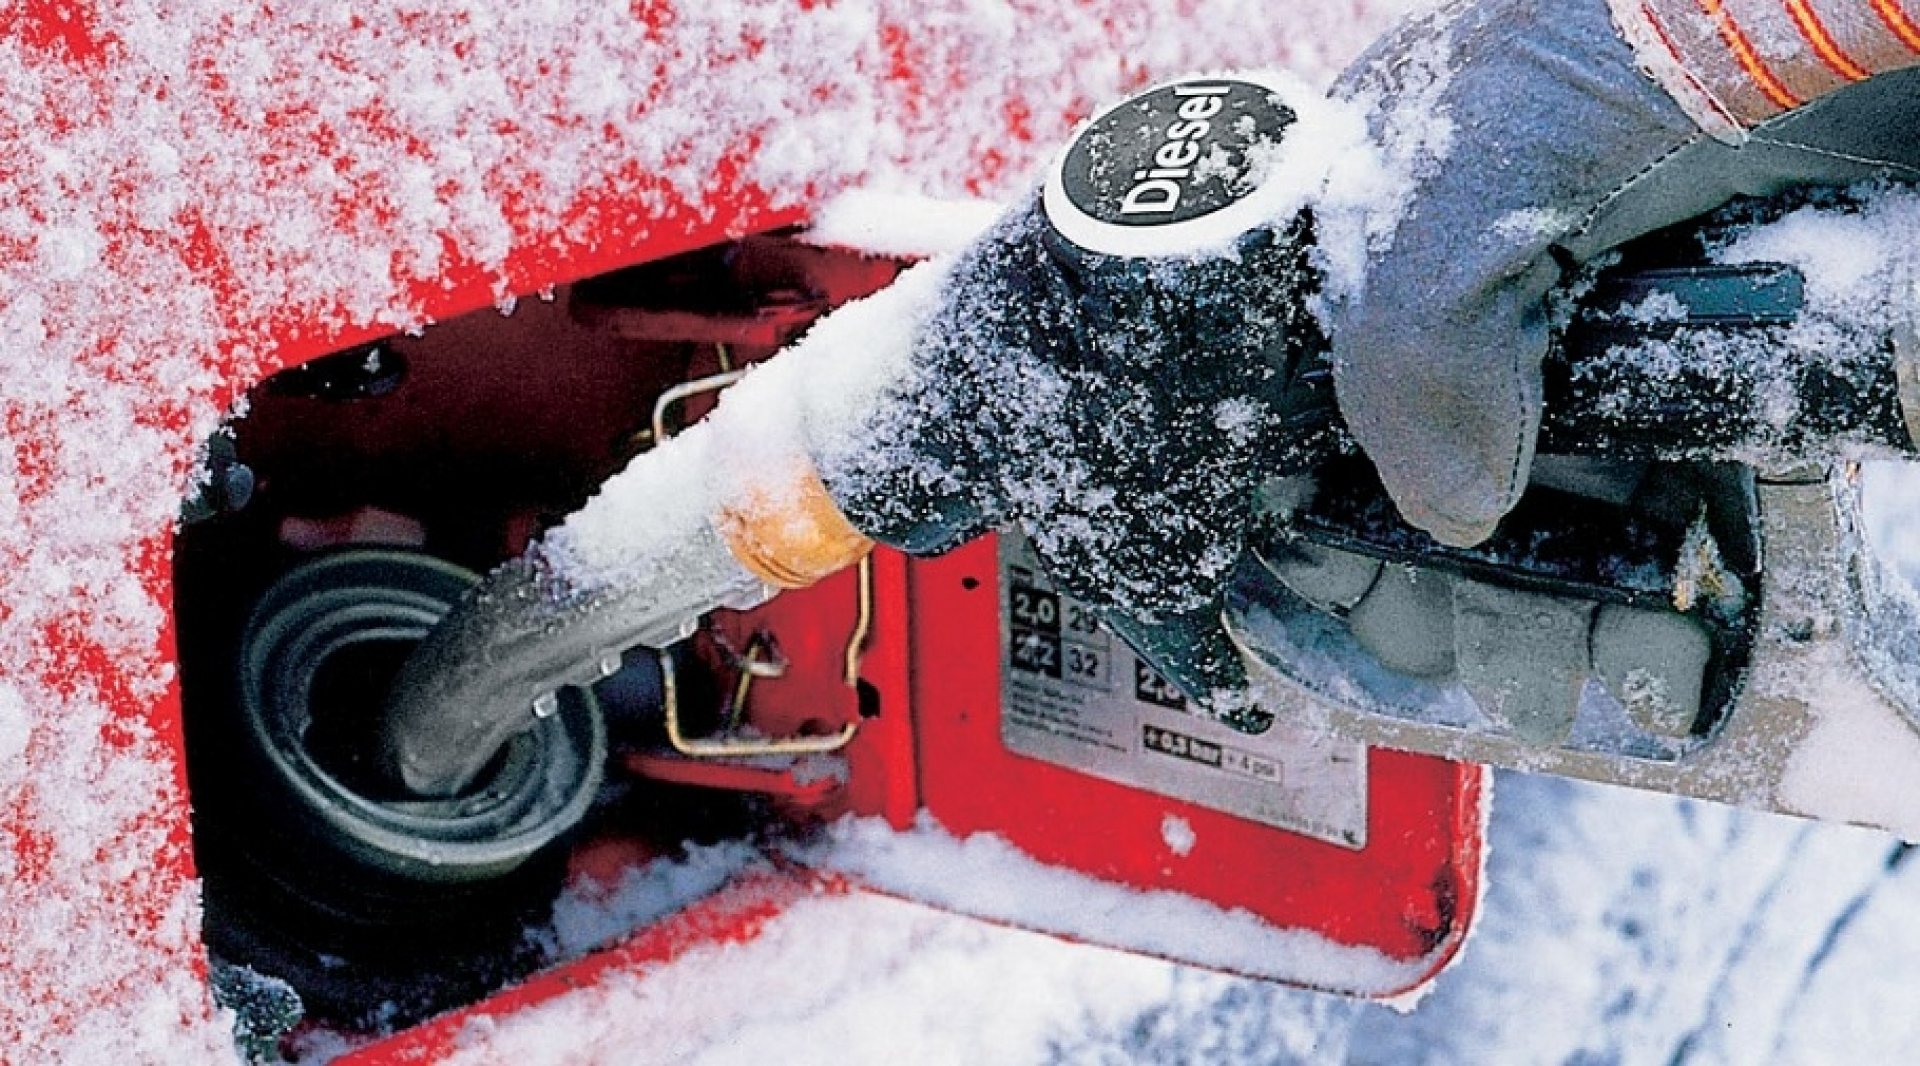 Заправляем авто на морозе: правда и мифы об объеме топлива при -20°С